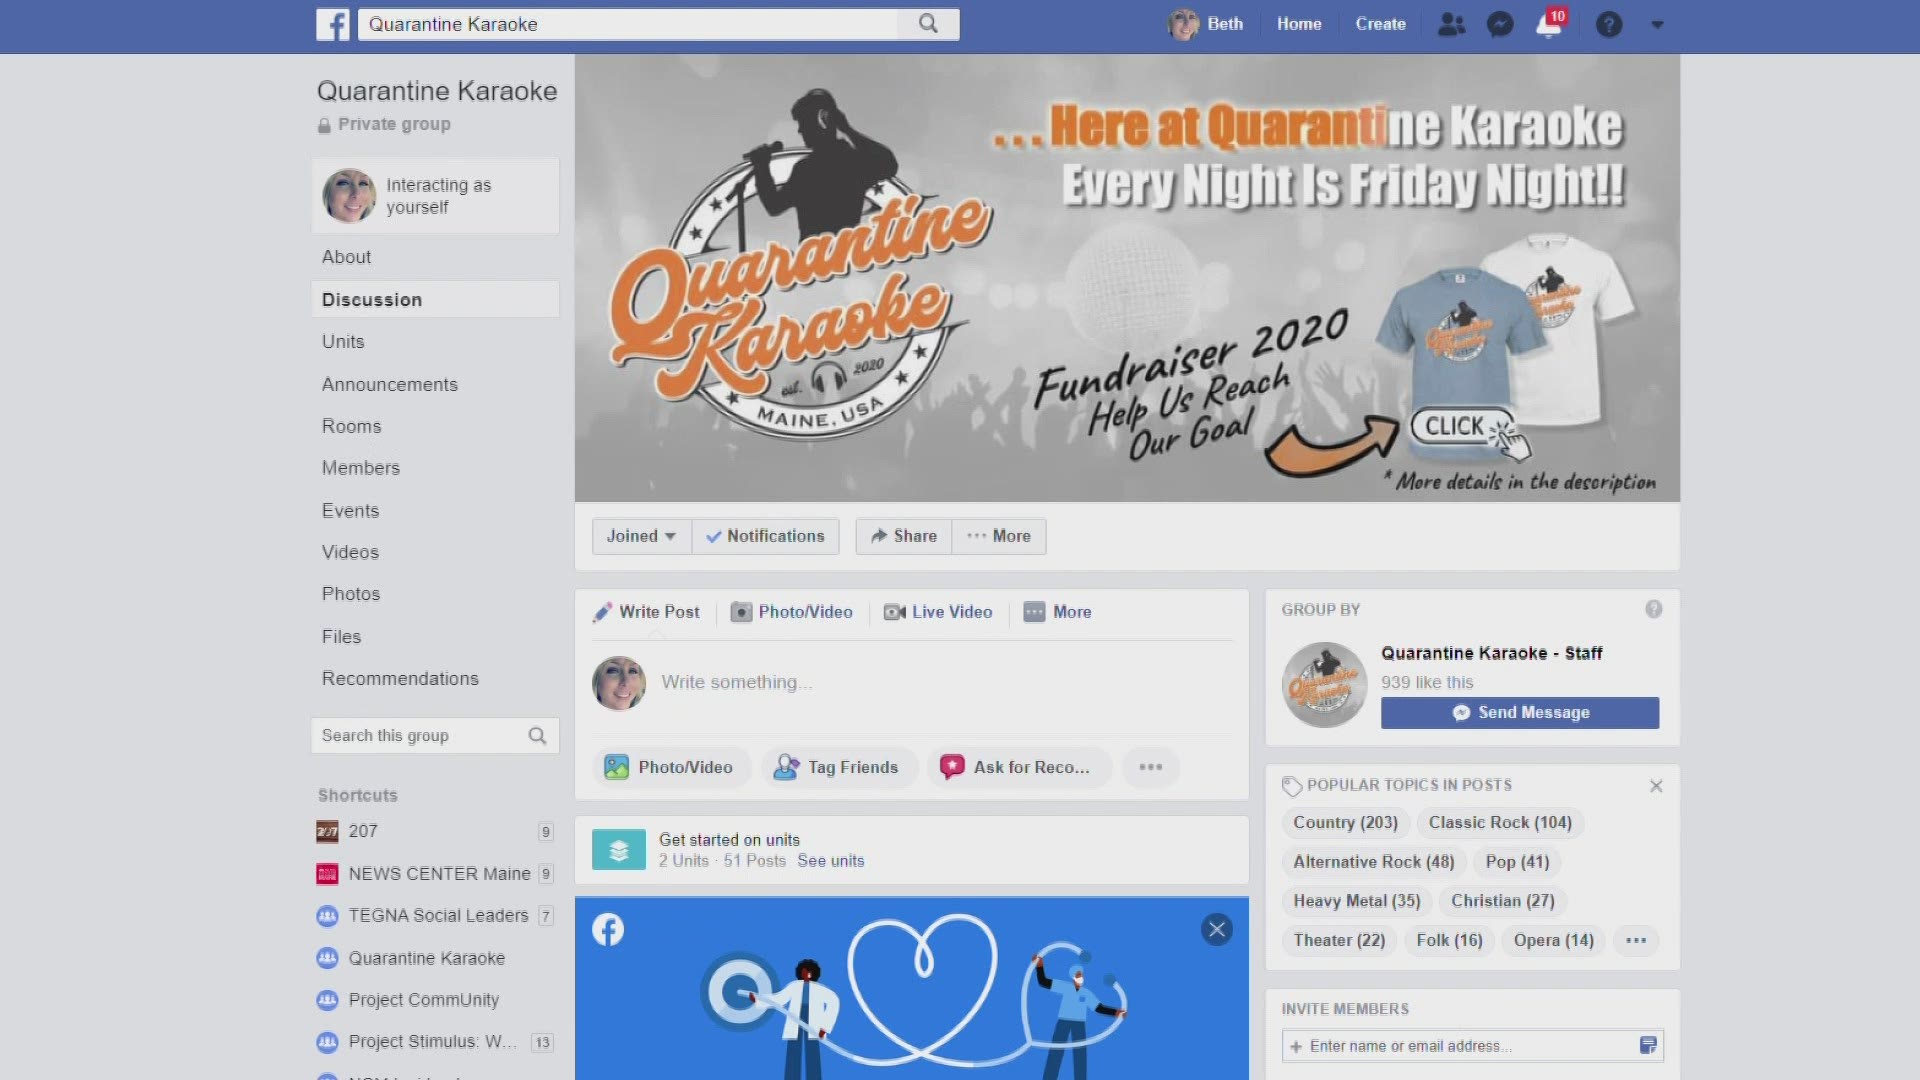 Mark Lum has performed on the popular Facebook Group Quarantine Karaoke, started in Maine.